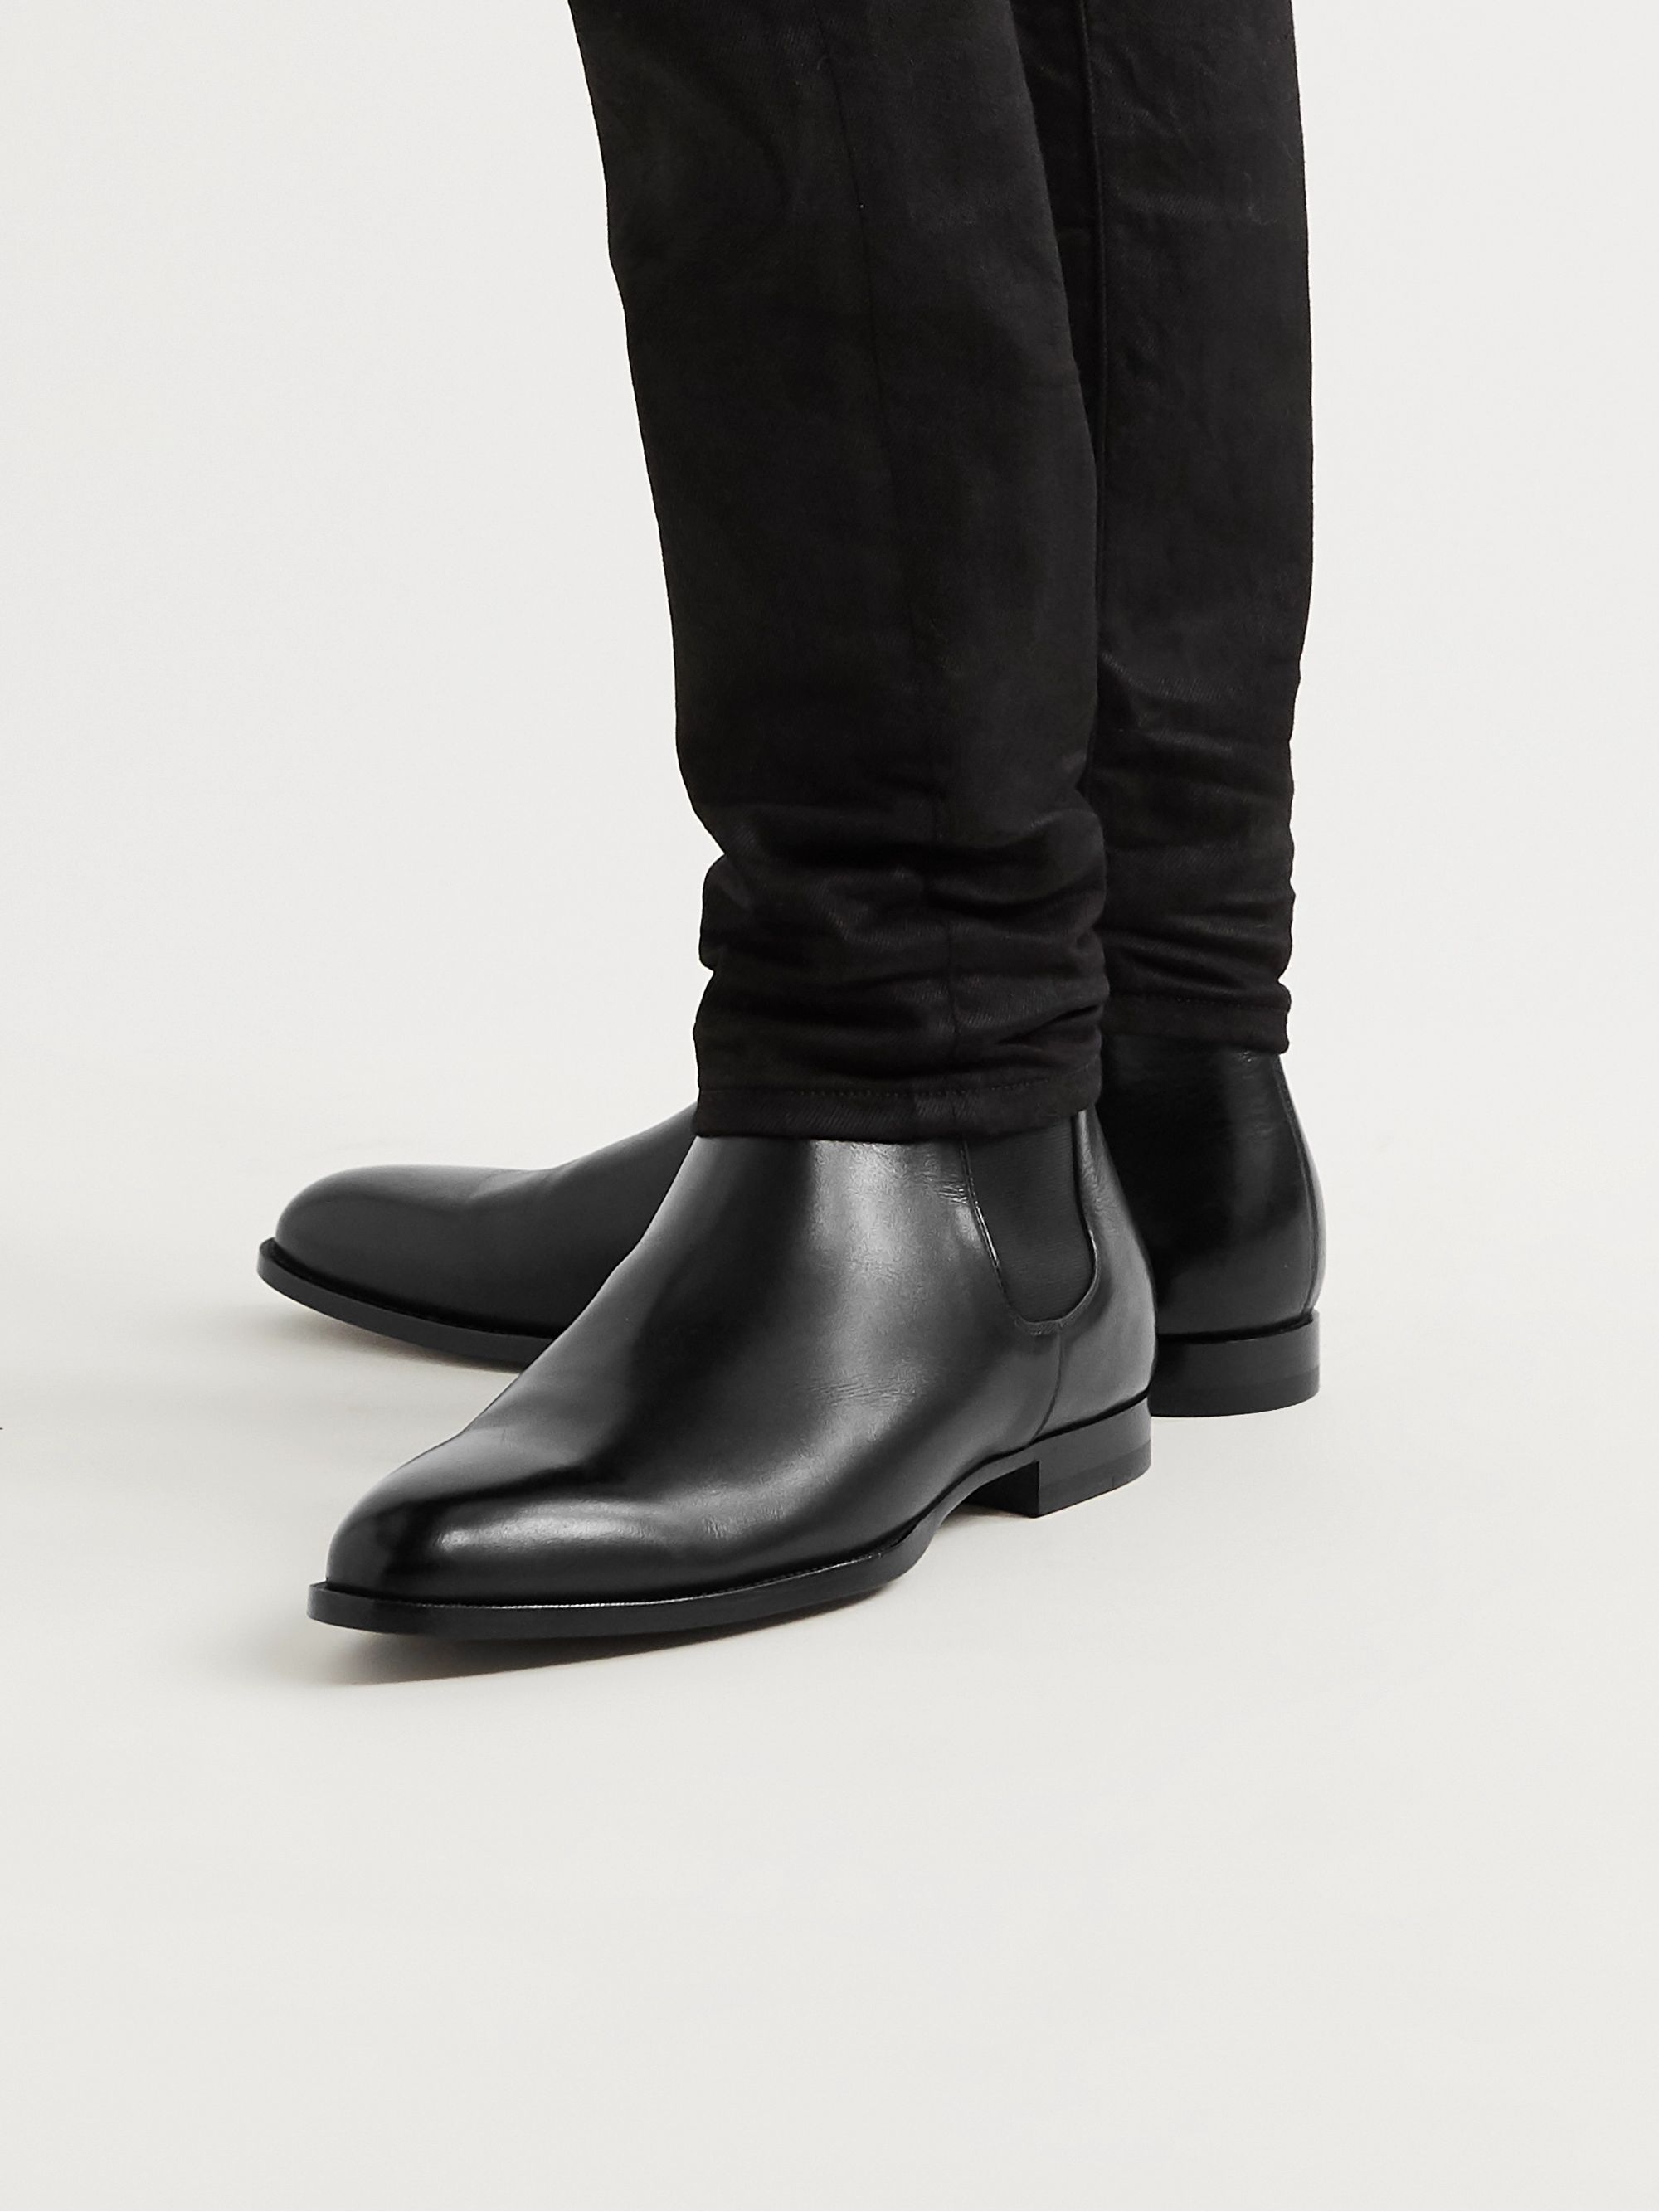 Black Leather Chelsea Boots | CELINE HOMME | MR PORTER